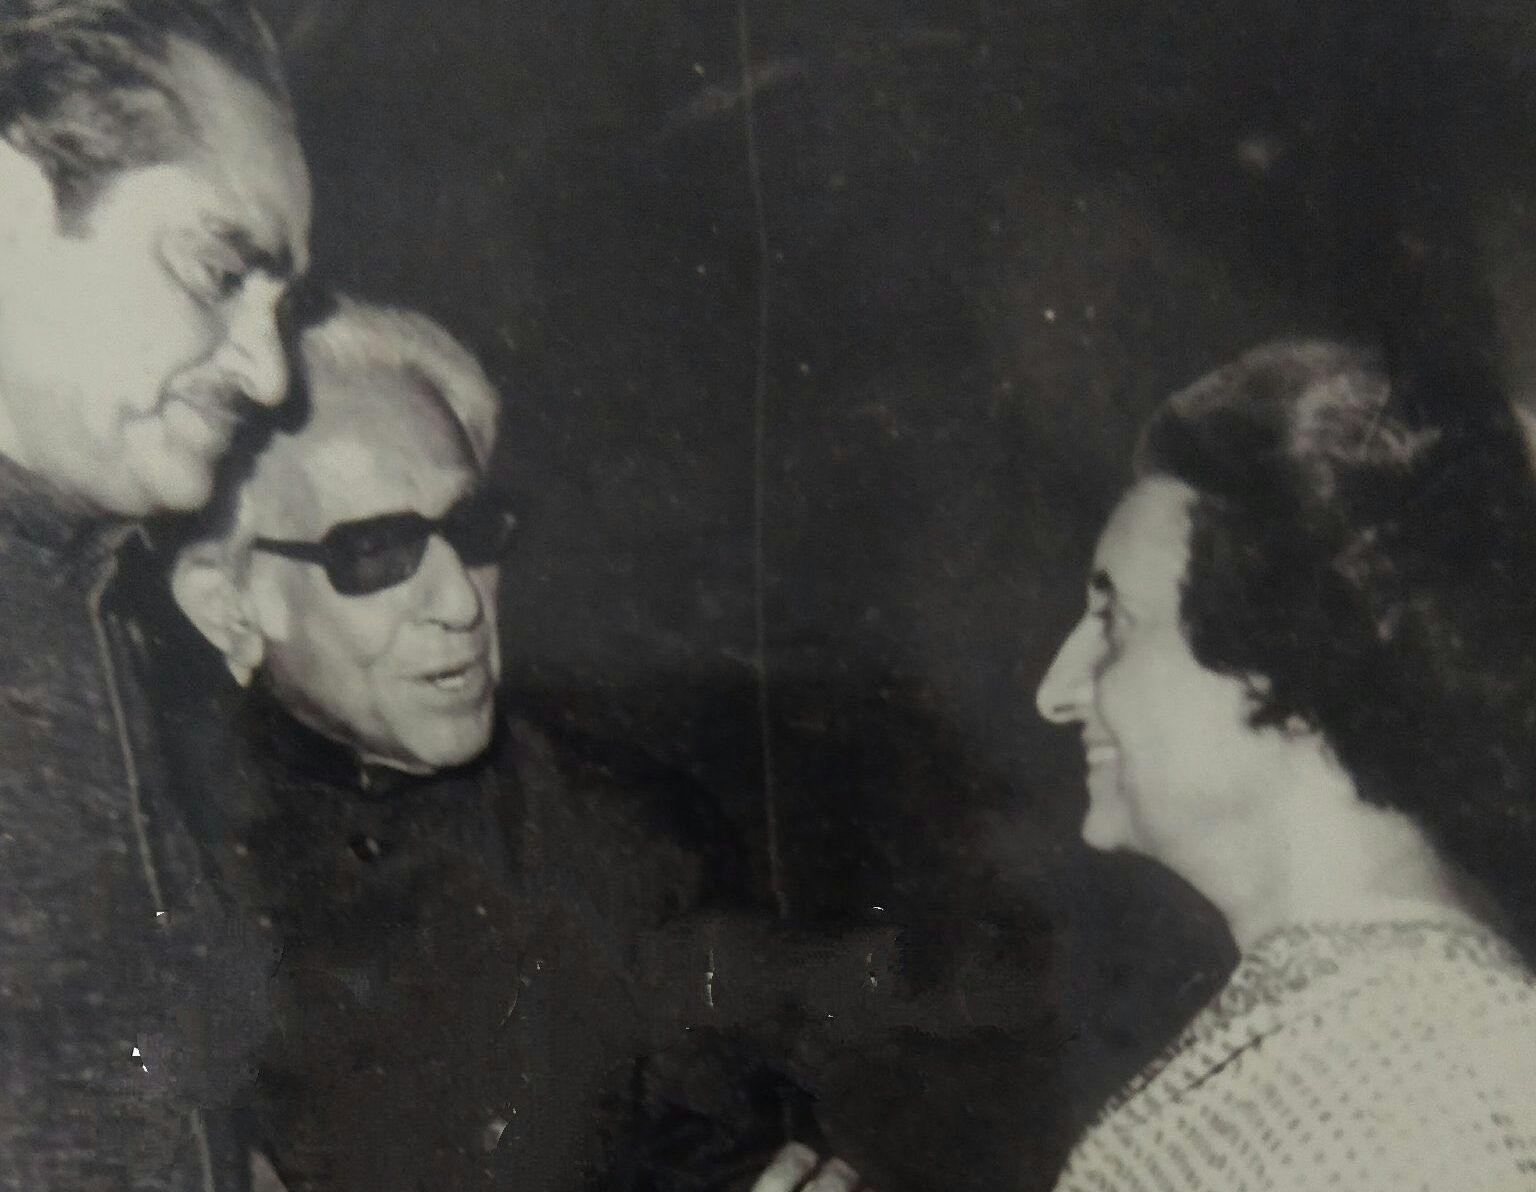 Harindranath Chattopadhyay (centre) with Indira Gandhi